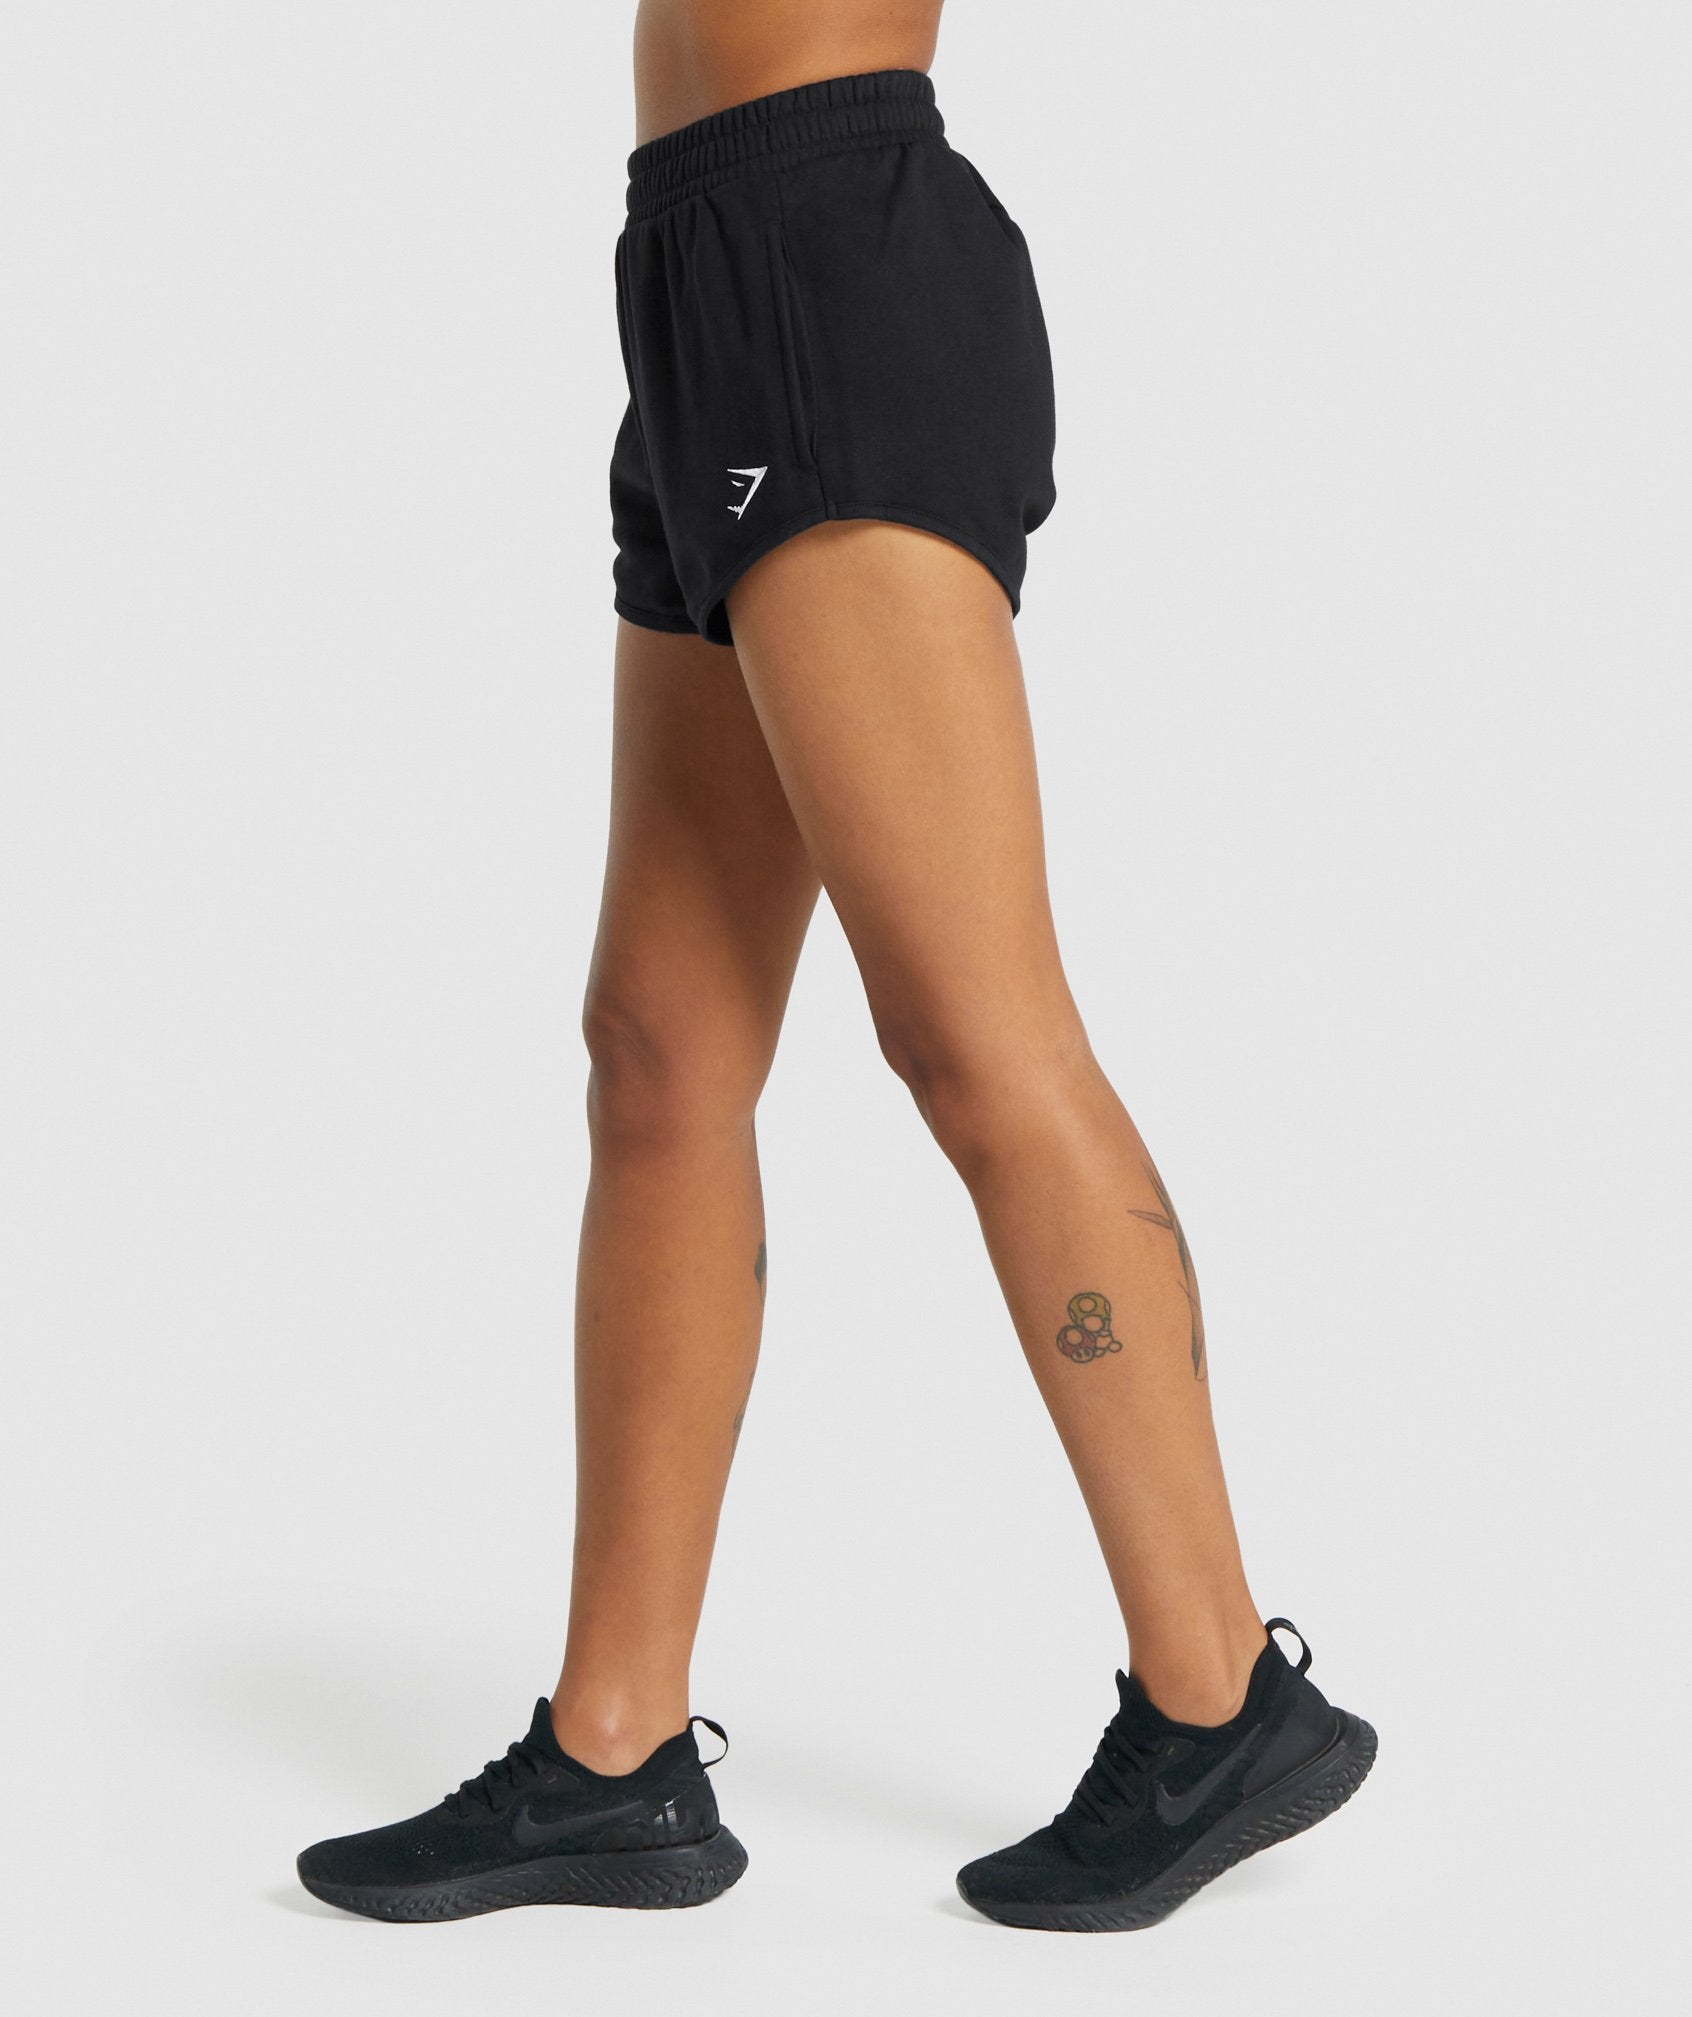 7 inch Nylon Workout Shorts (Hot-Wheels) – Mxtivated